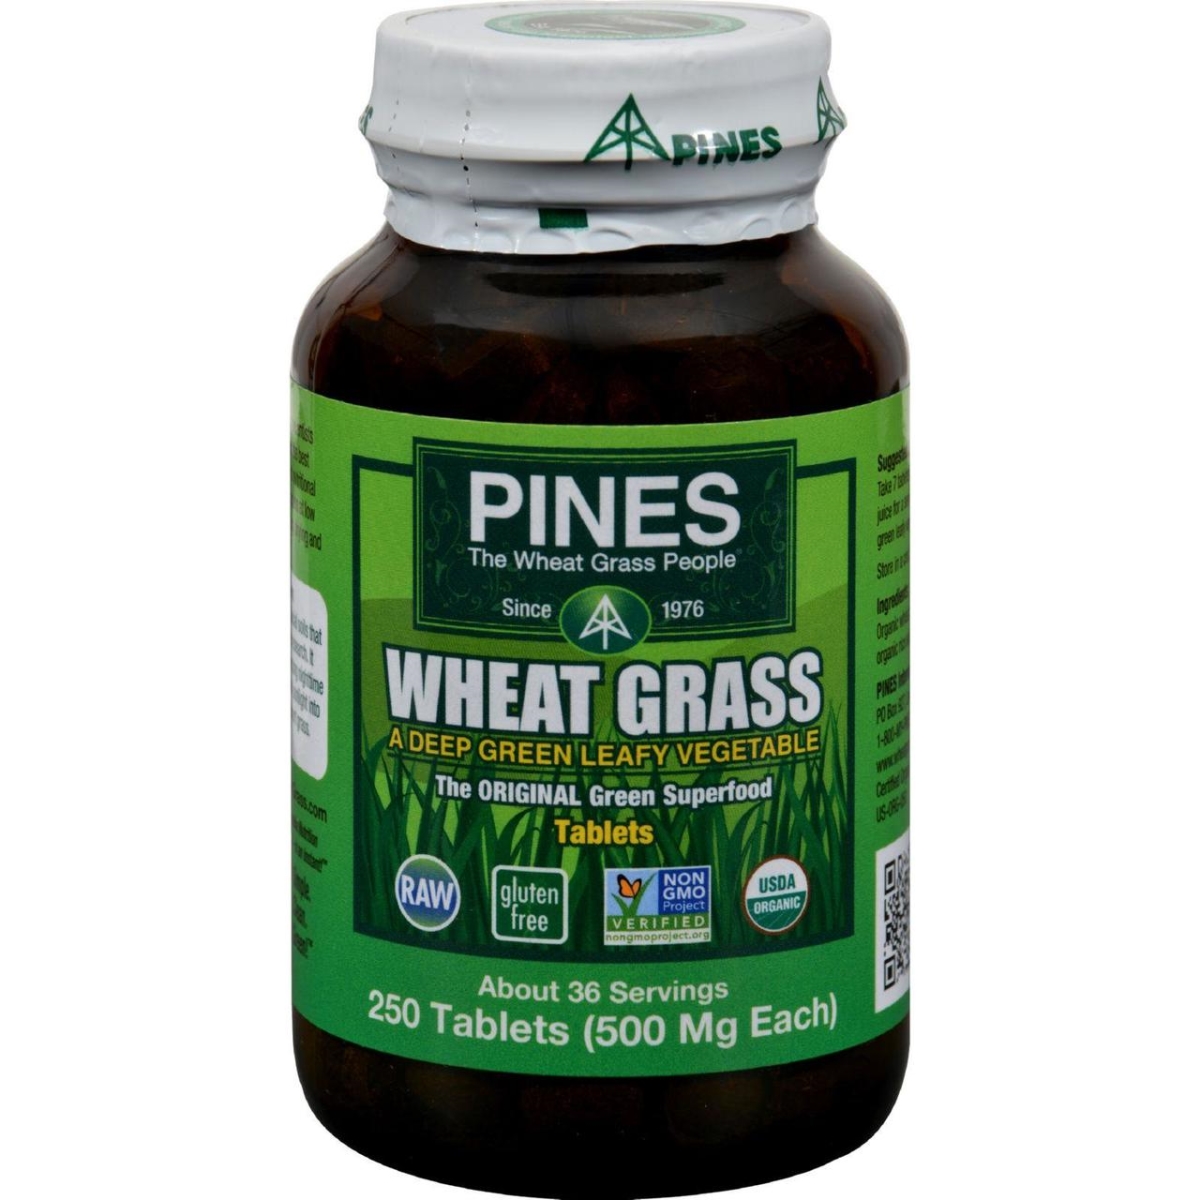 Hg0715029 500 Mg Wheat Grass - 250 Tablets